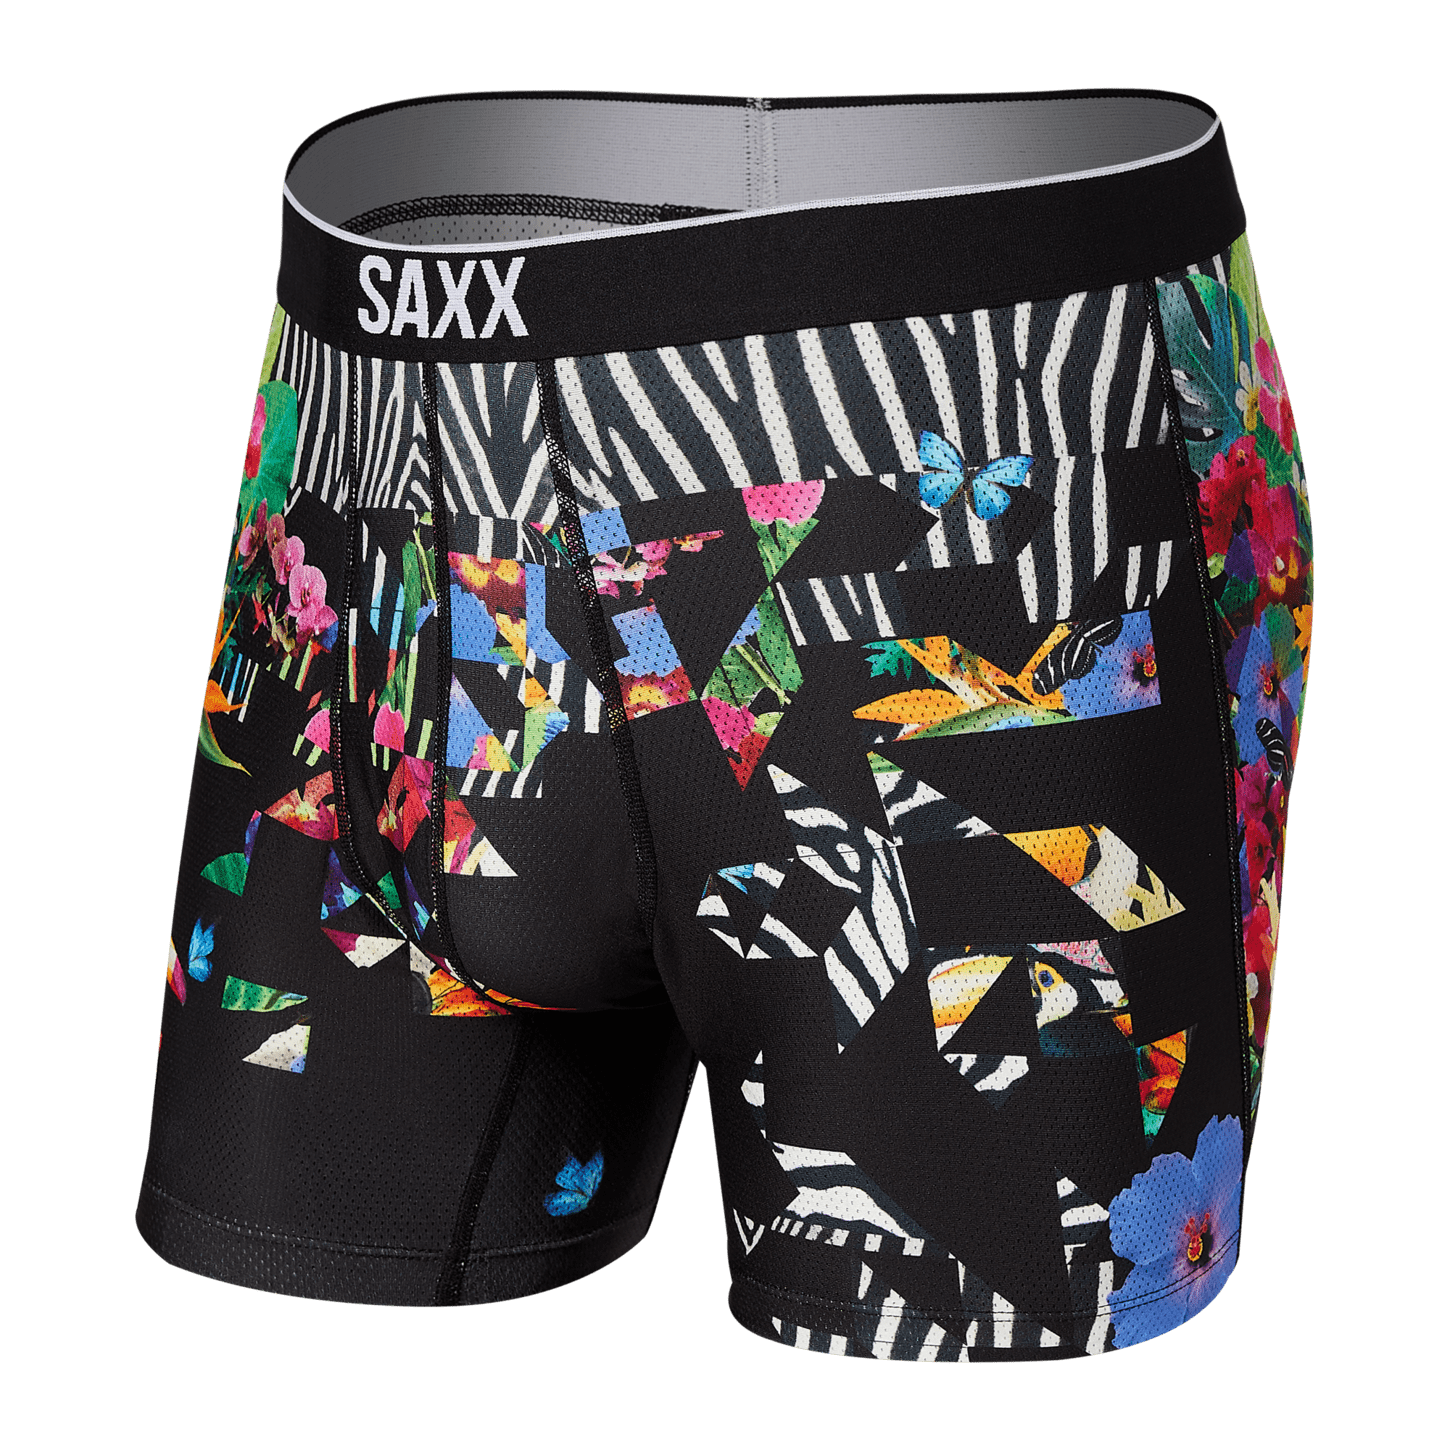 SAXX VOLT Boxer Brief - 12 pattern options. – Johns Barrhead